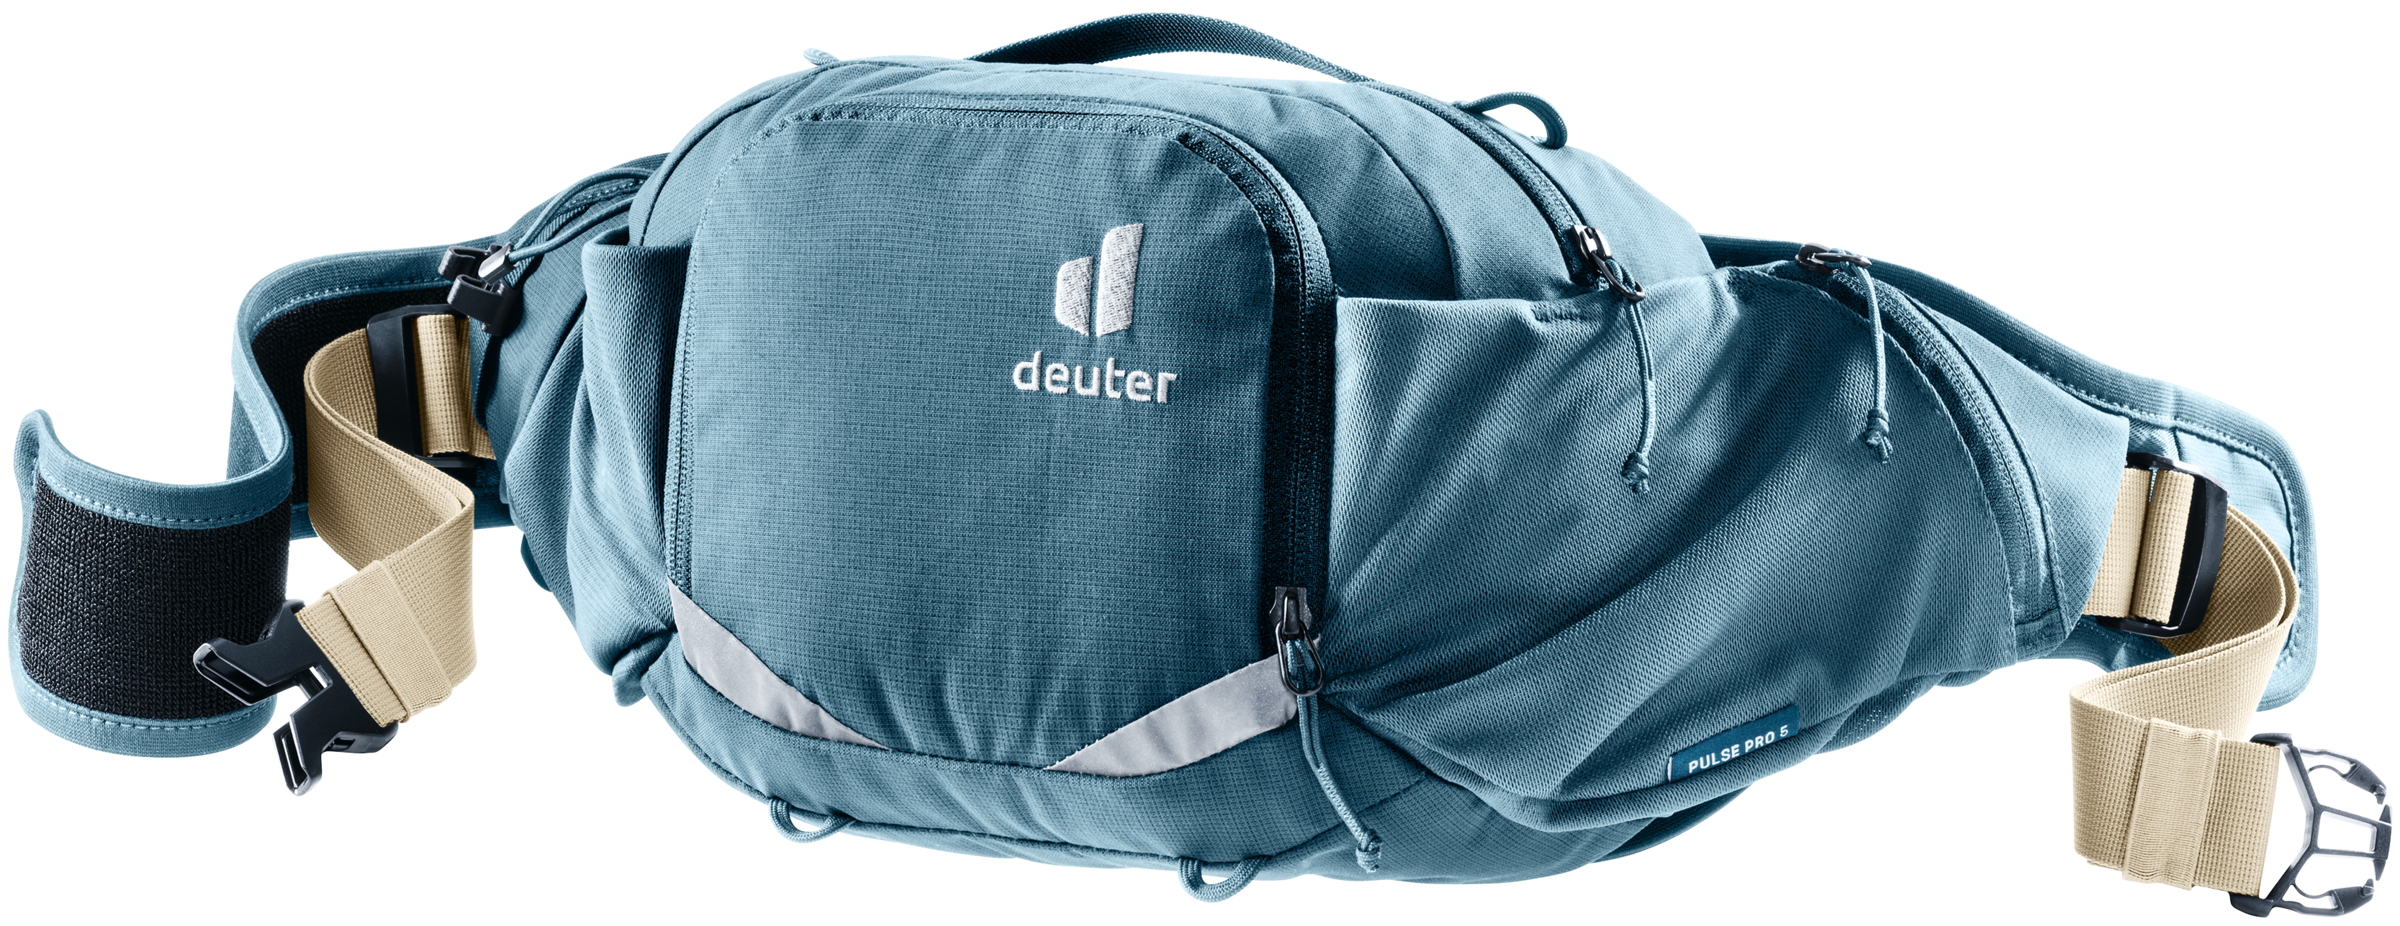 deuter Pulse Pro | Hip bag